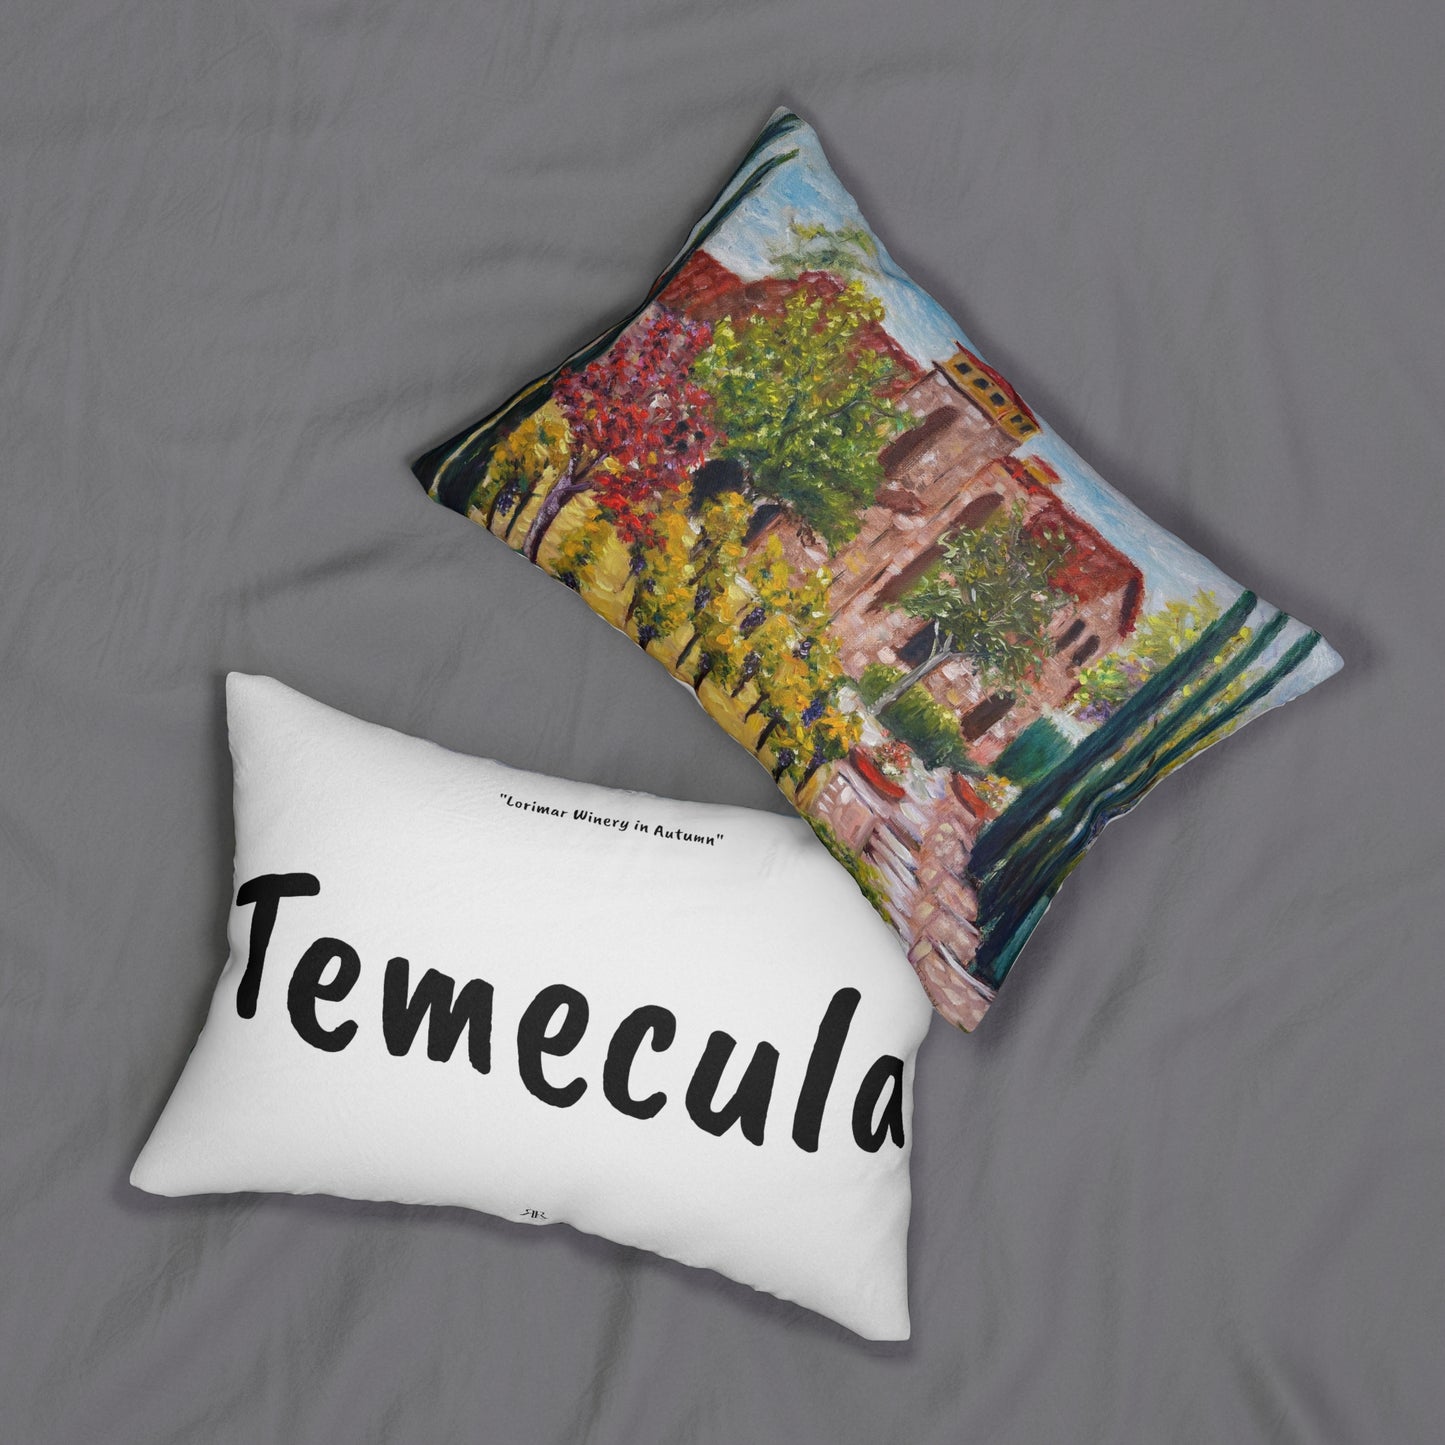 Oreiller lombaire Temecula avec la peinture « Lorimar Winery in Autumn » et « Temecula »